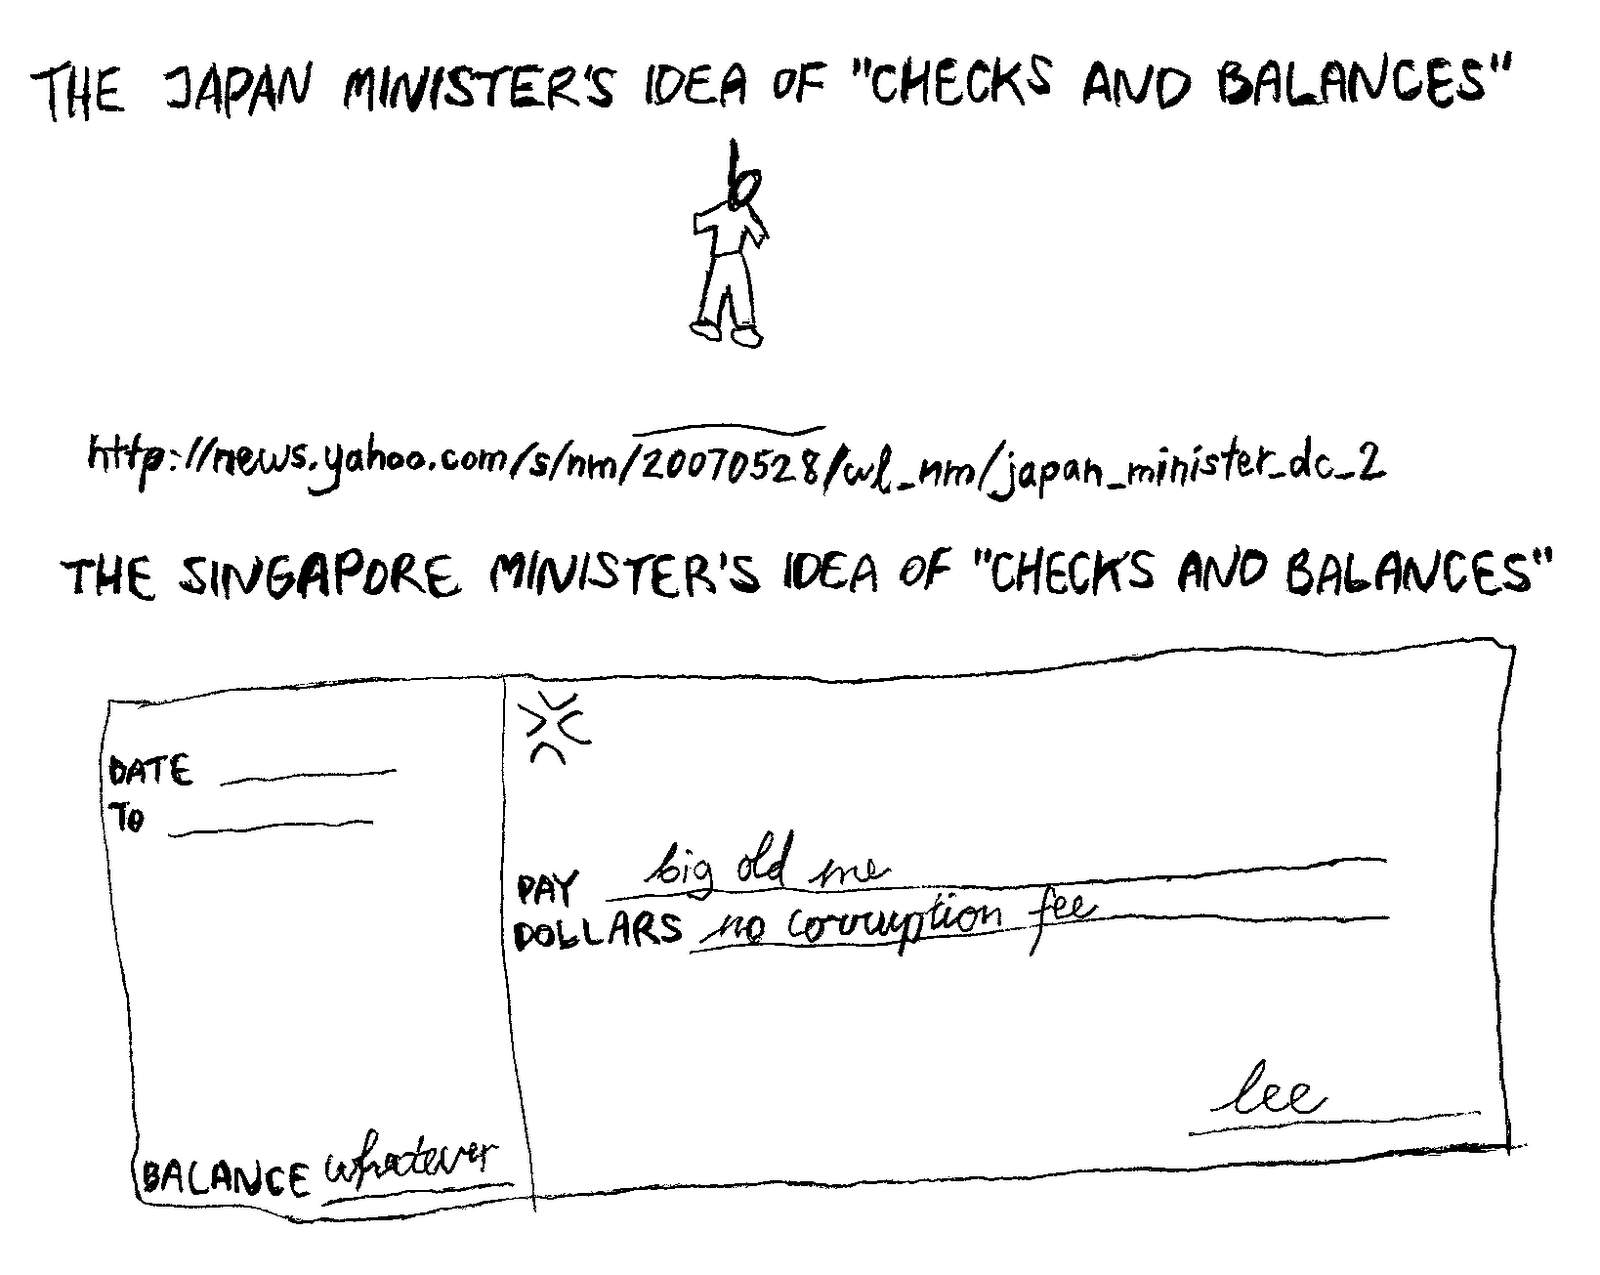 checks and balances - Japan minister, vs Singapore minister (big)